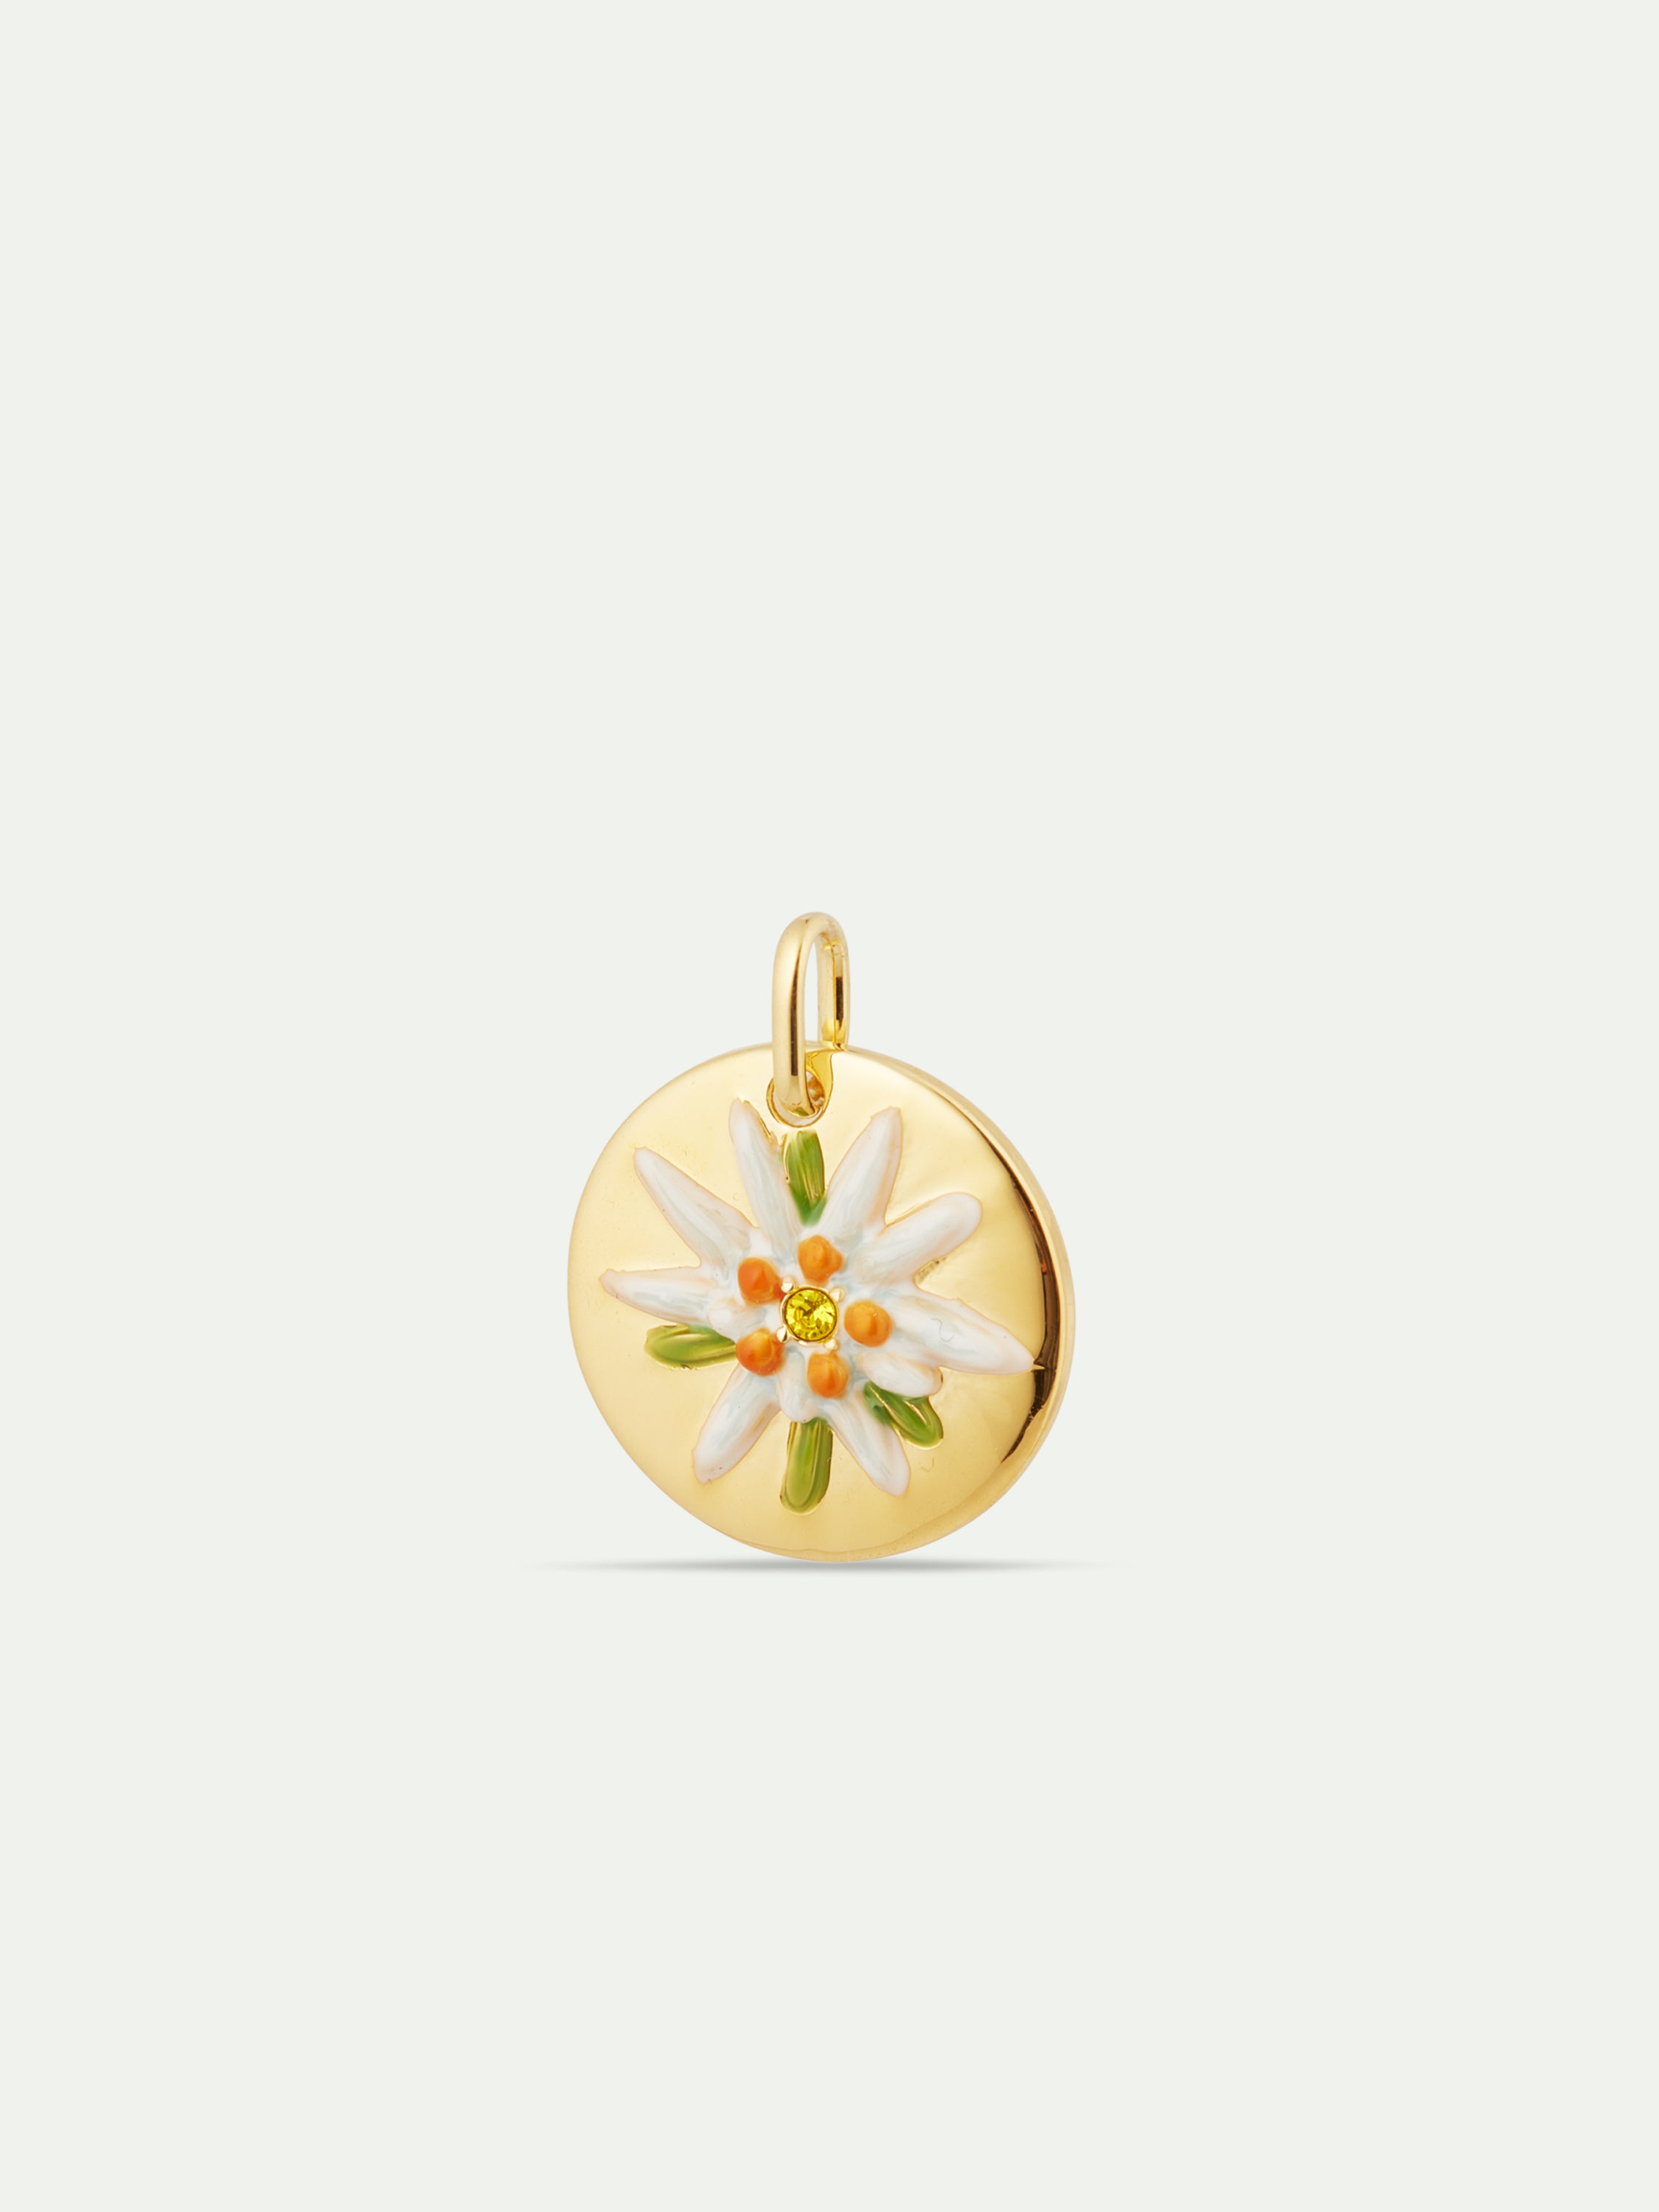 Edelweiss flower pendant